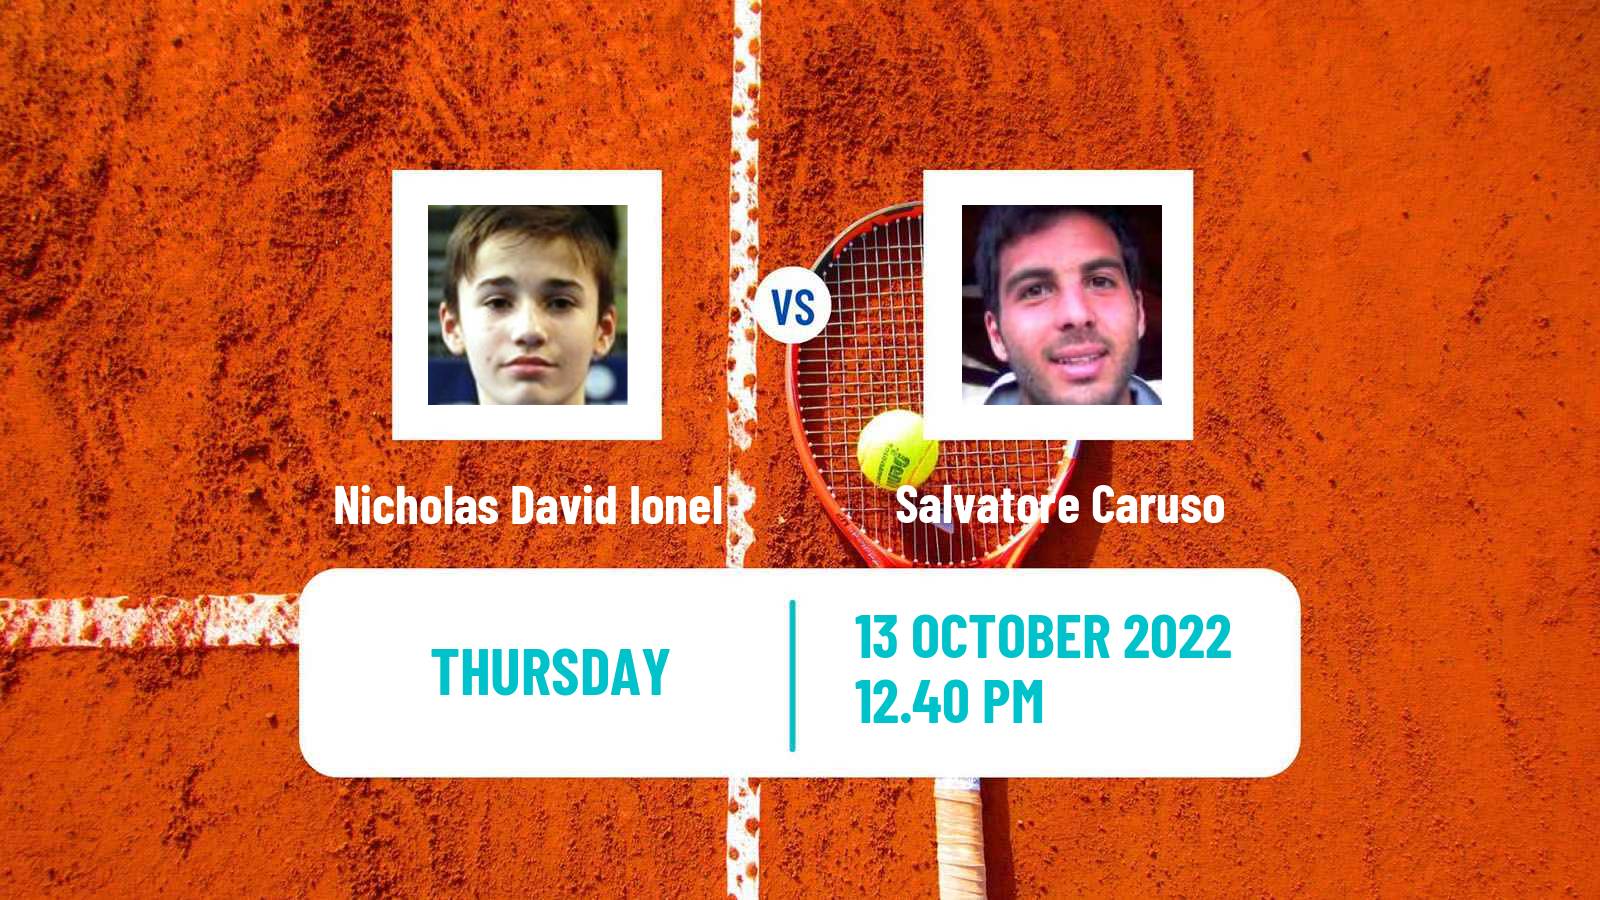 Tennis ATP Challenger Nicholas David Ionel - Salvatore Caruso